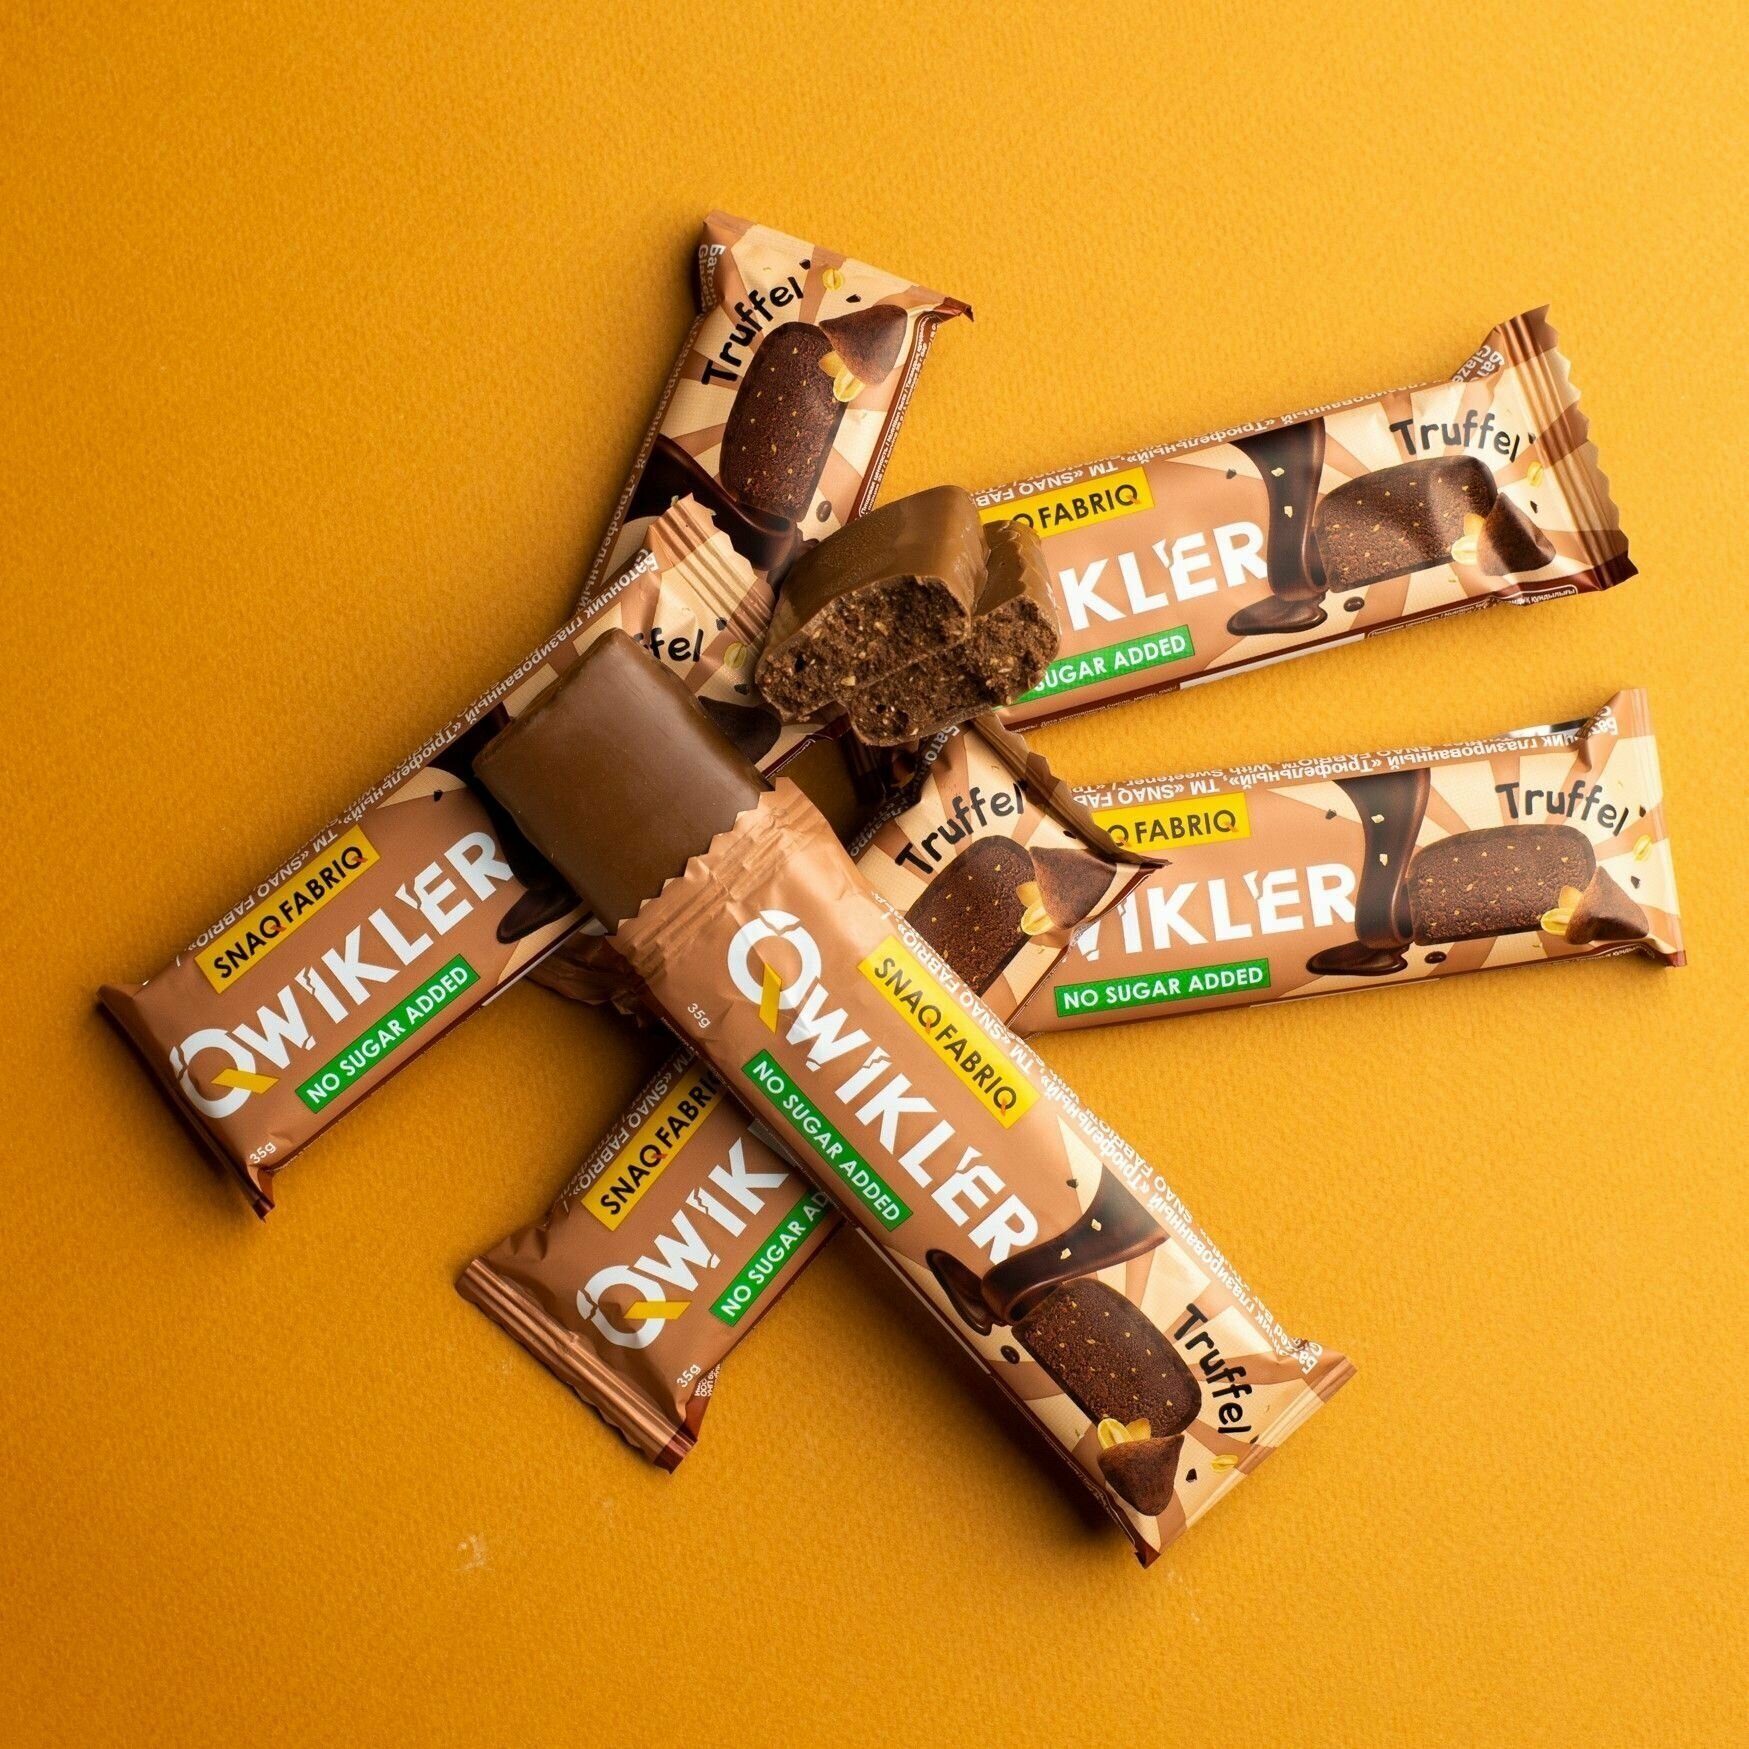 SNAQ FABRIQ Qwikler Батончик в шоколаде без сахара "Трюфель", 12шт х 35г - фотография № 3